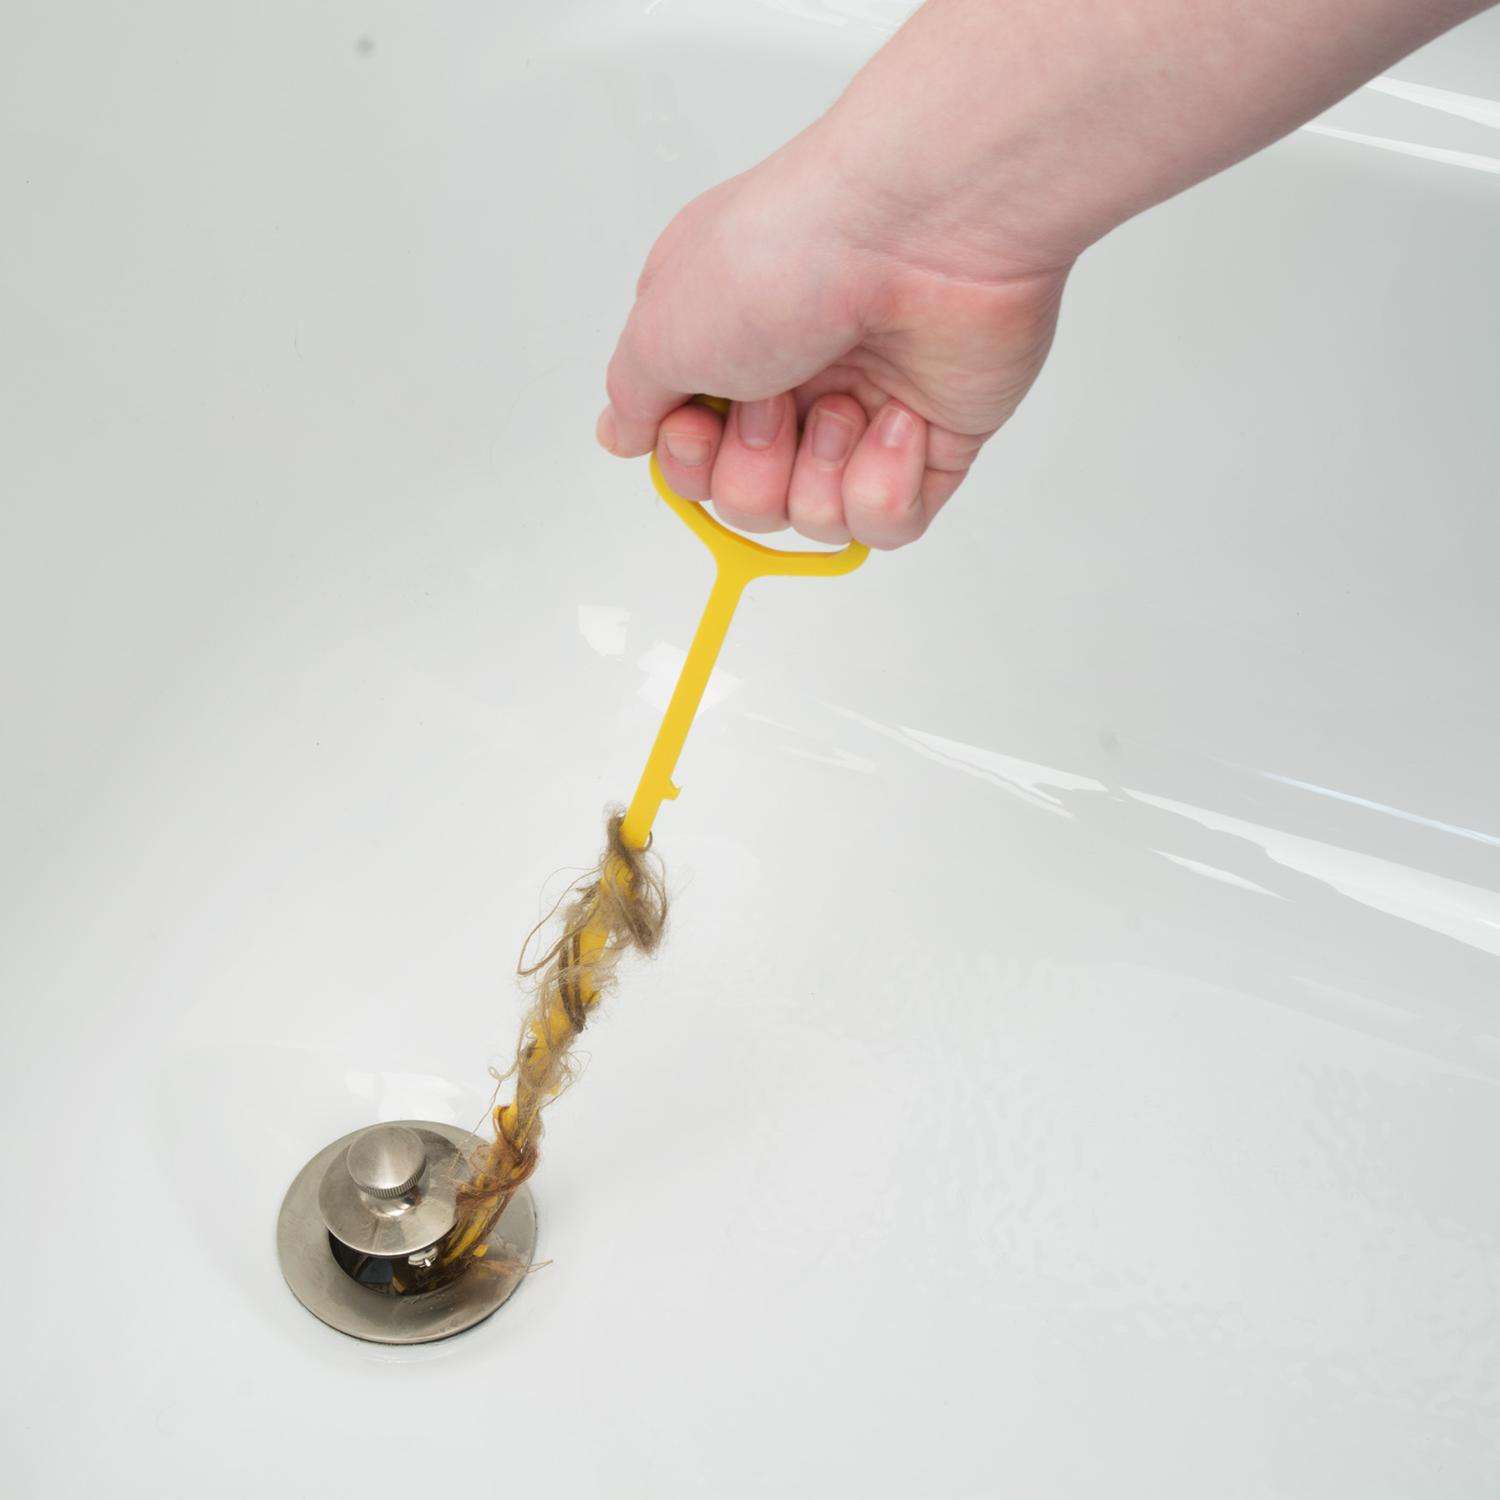 Drain Clog Remover Hair Drain Cleaner Tool Drain Opener for Water